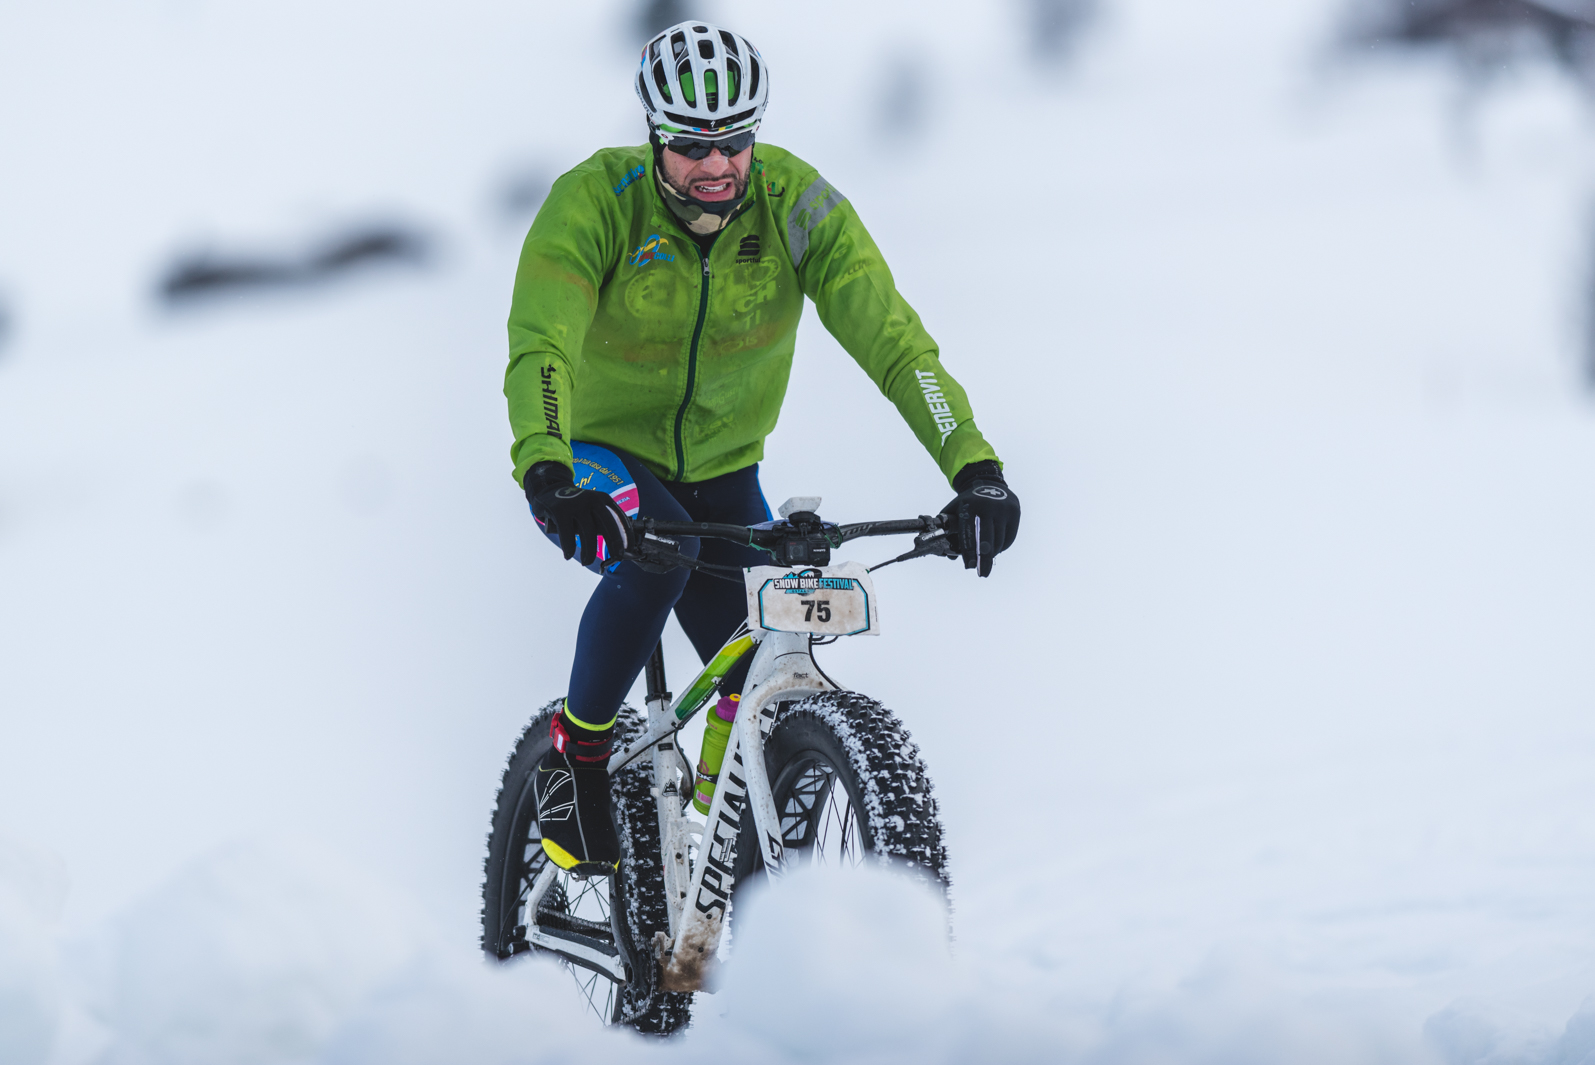 Snow Bike Festival 2019 - Gstaad (SUI) - Highlight